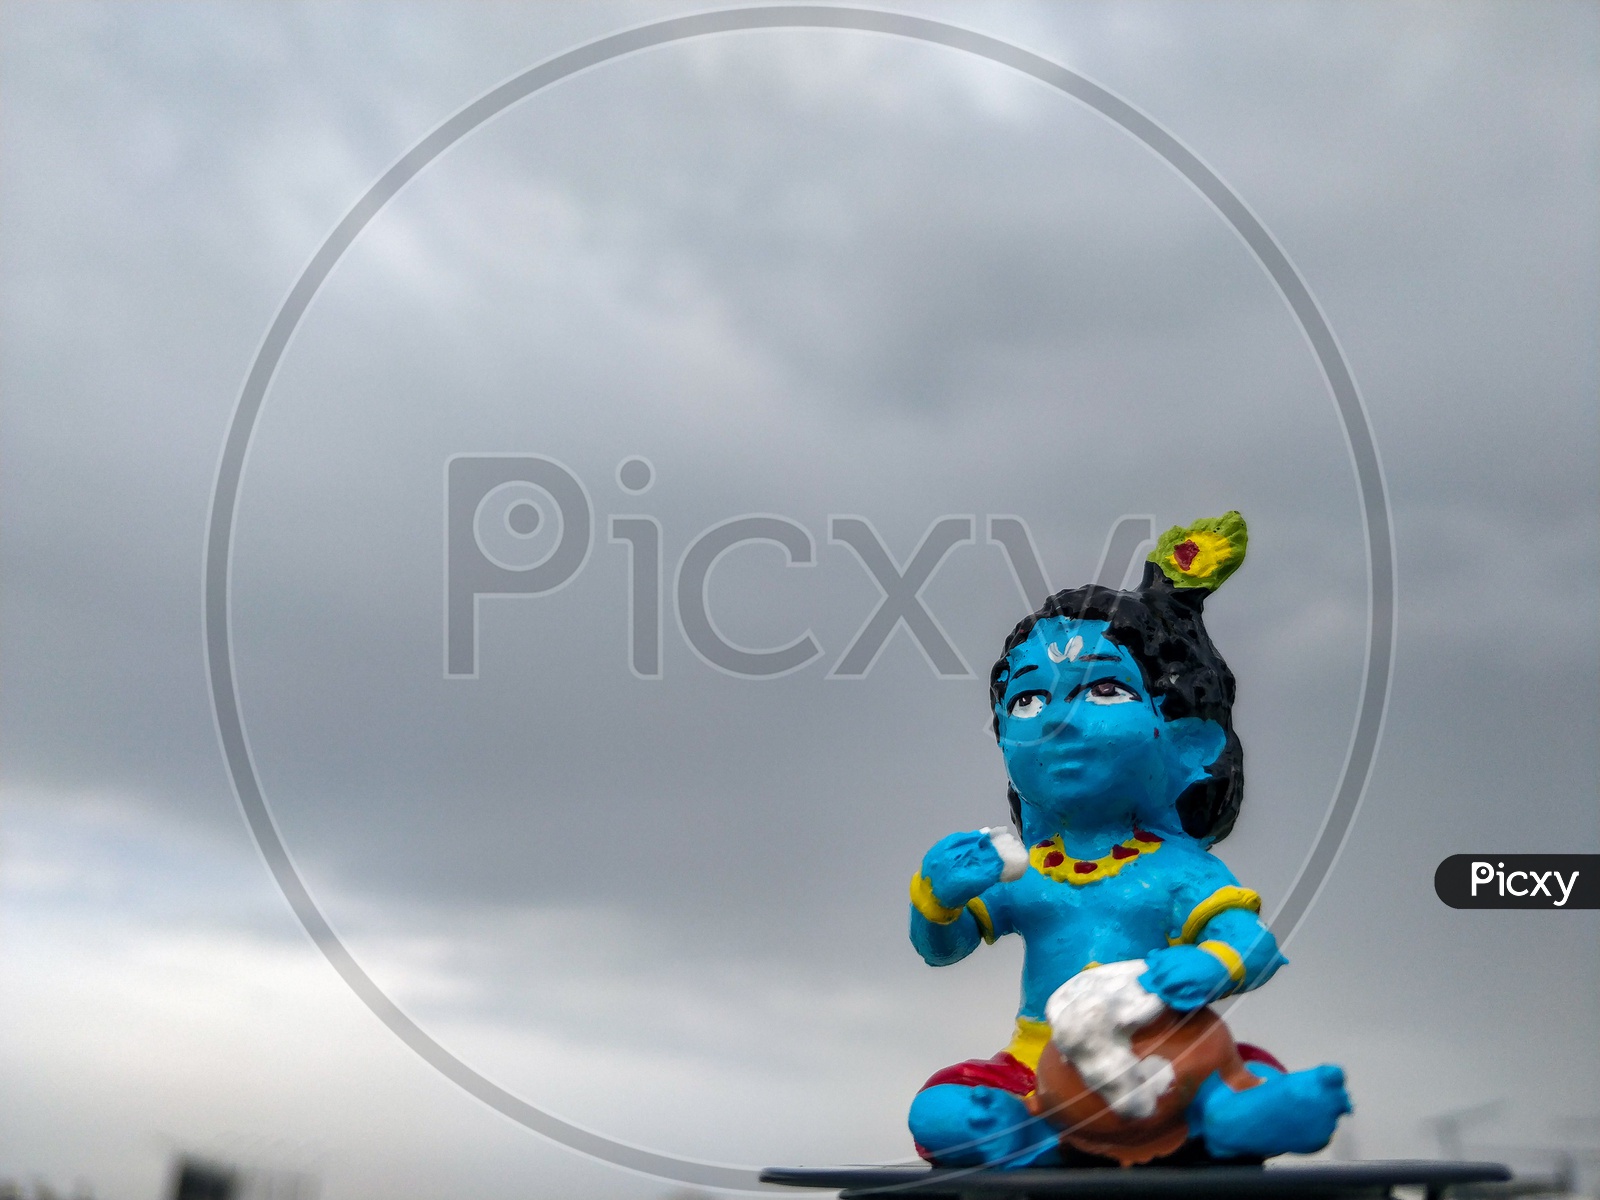 Lord Krishna toy